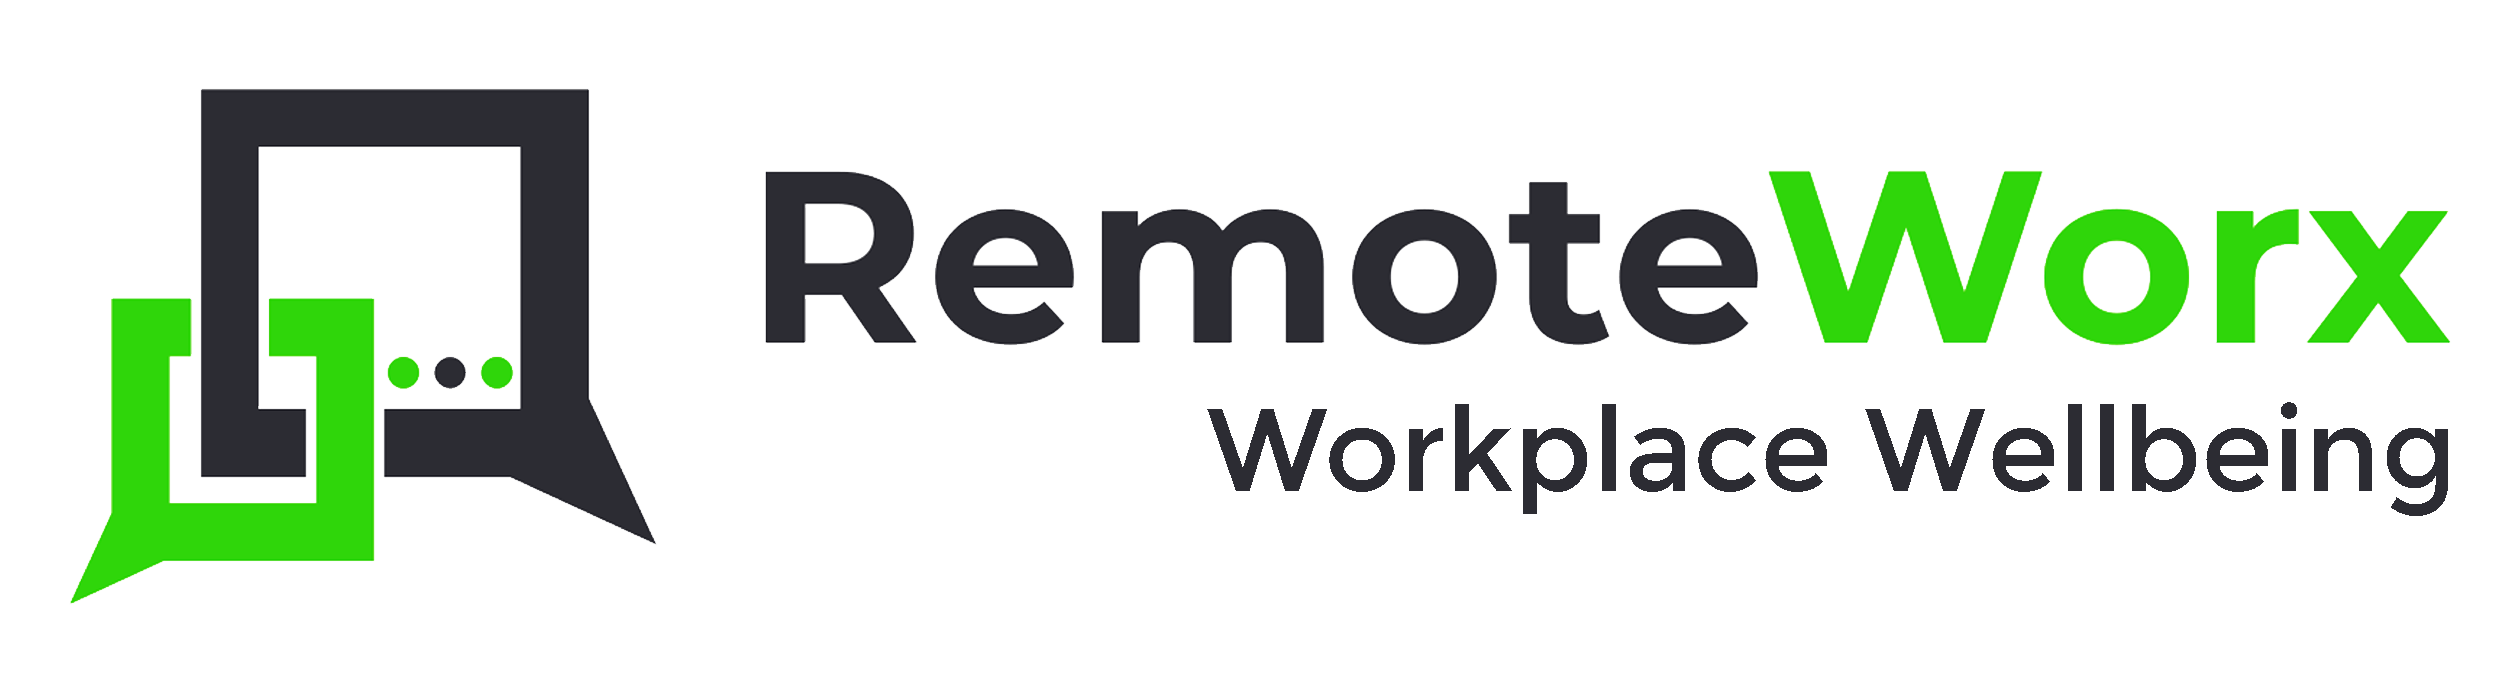 remoteworx logo